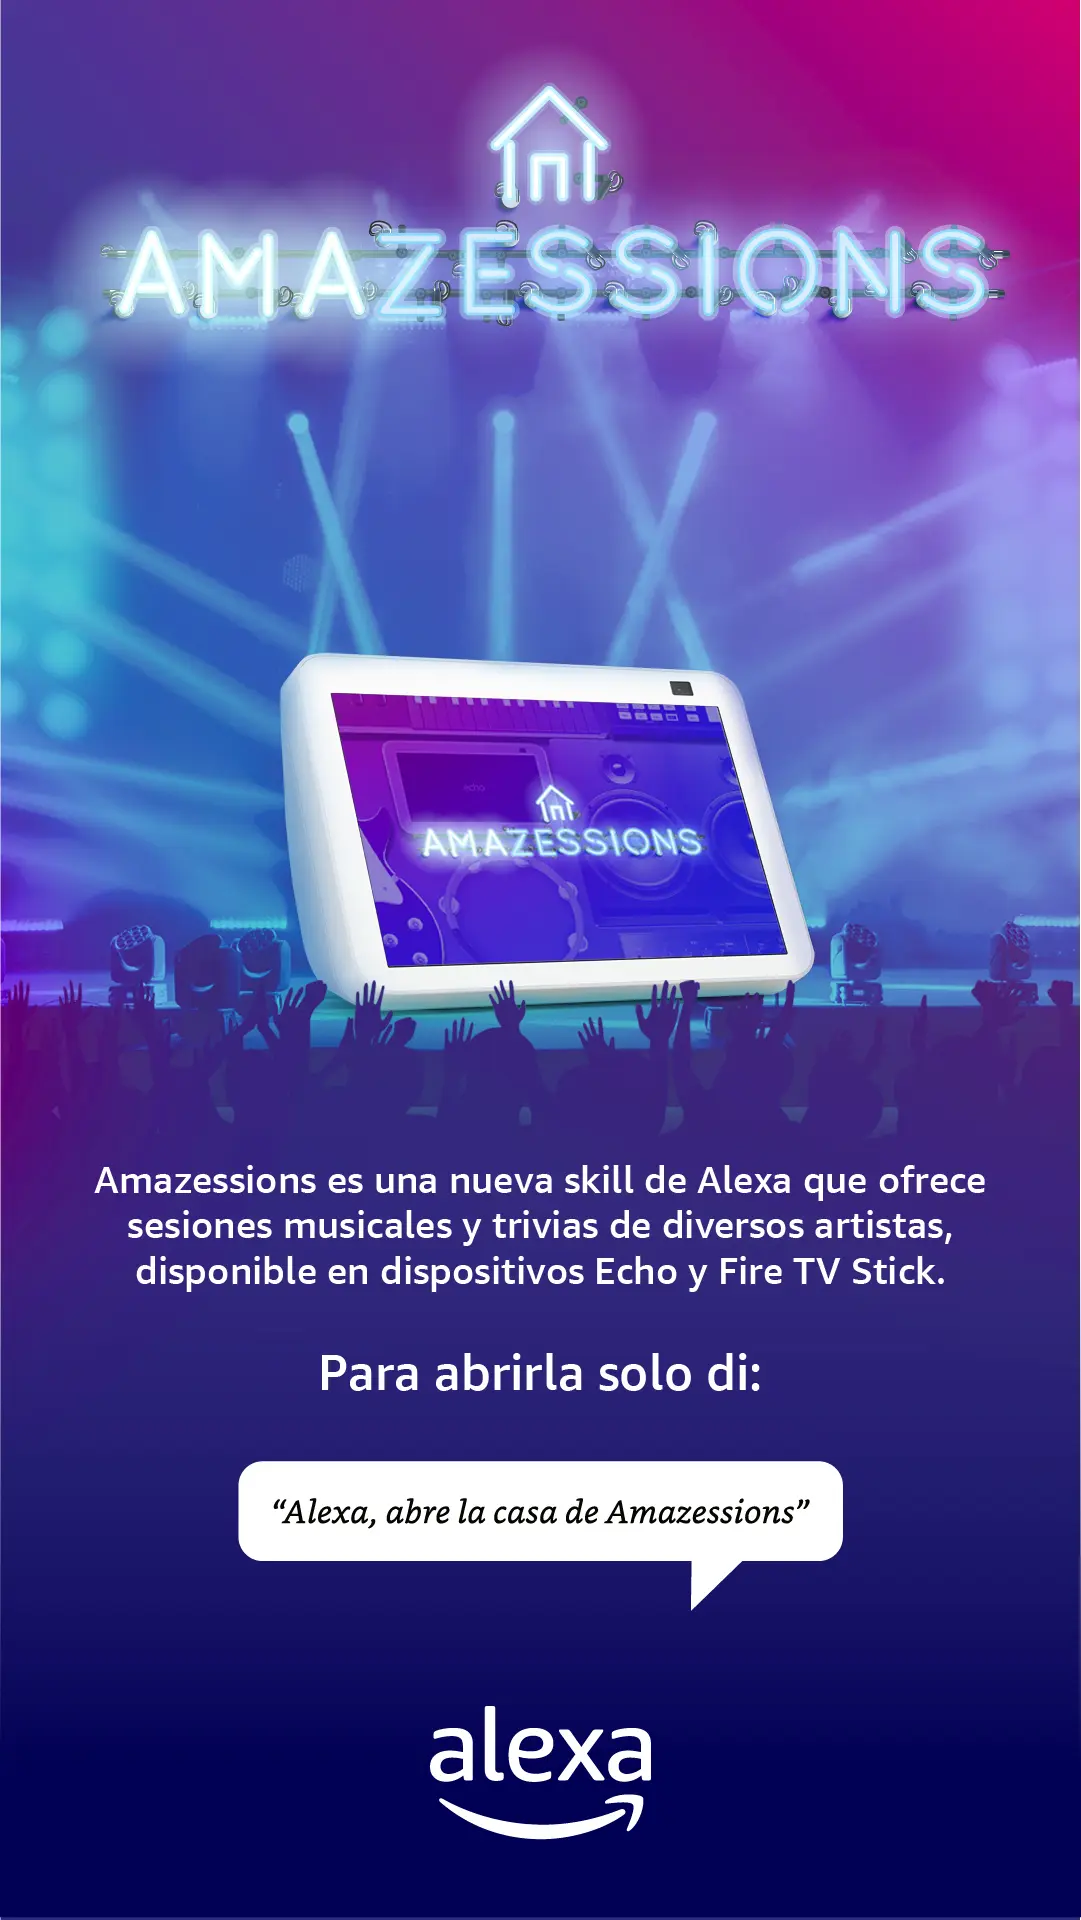 Amazon presenta Amazessions, la nueva skill de Alexa